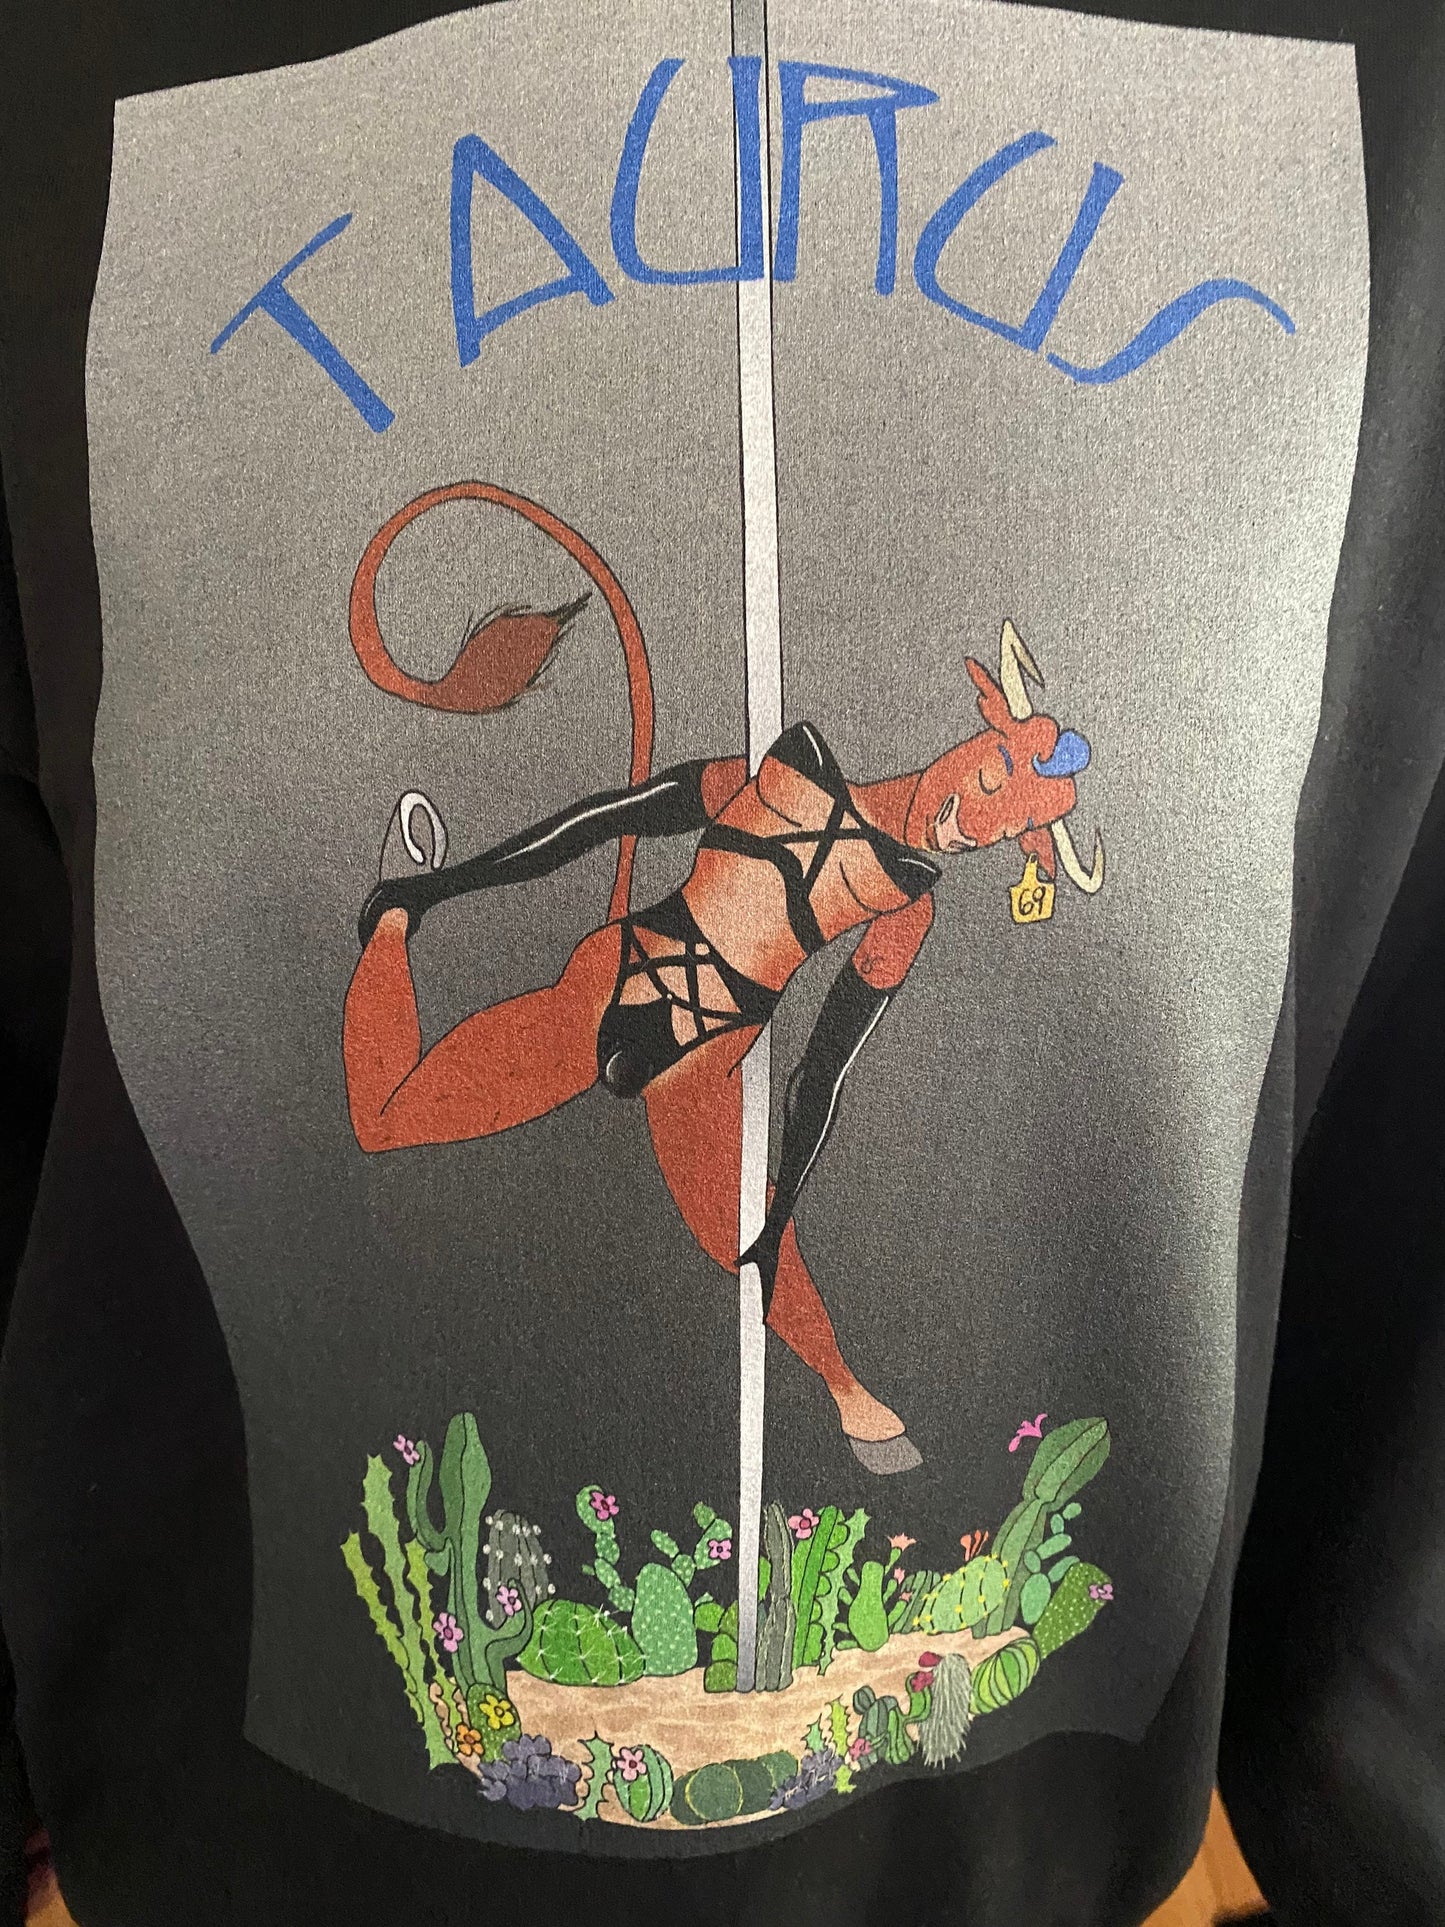 Taurus Sweatshirt